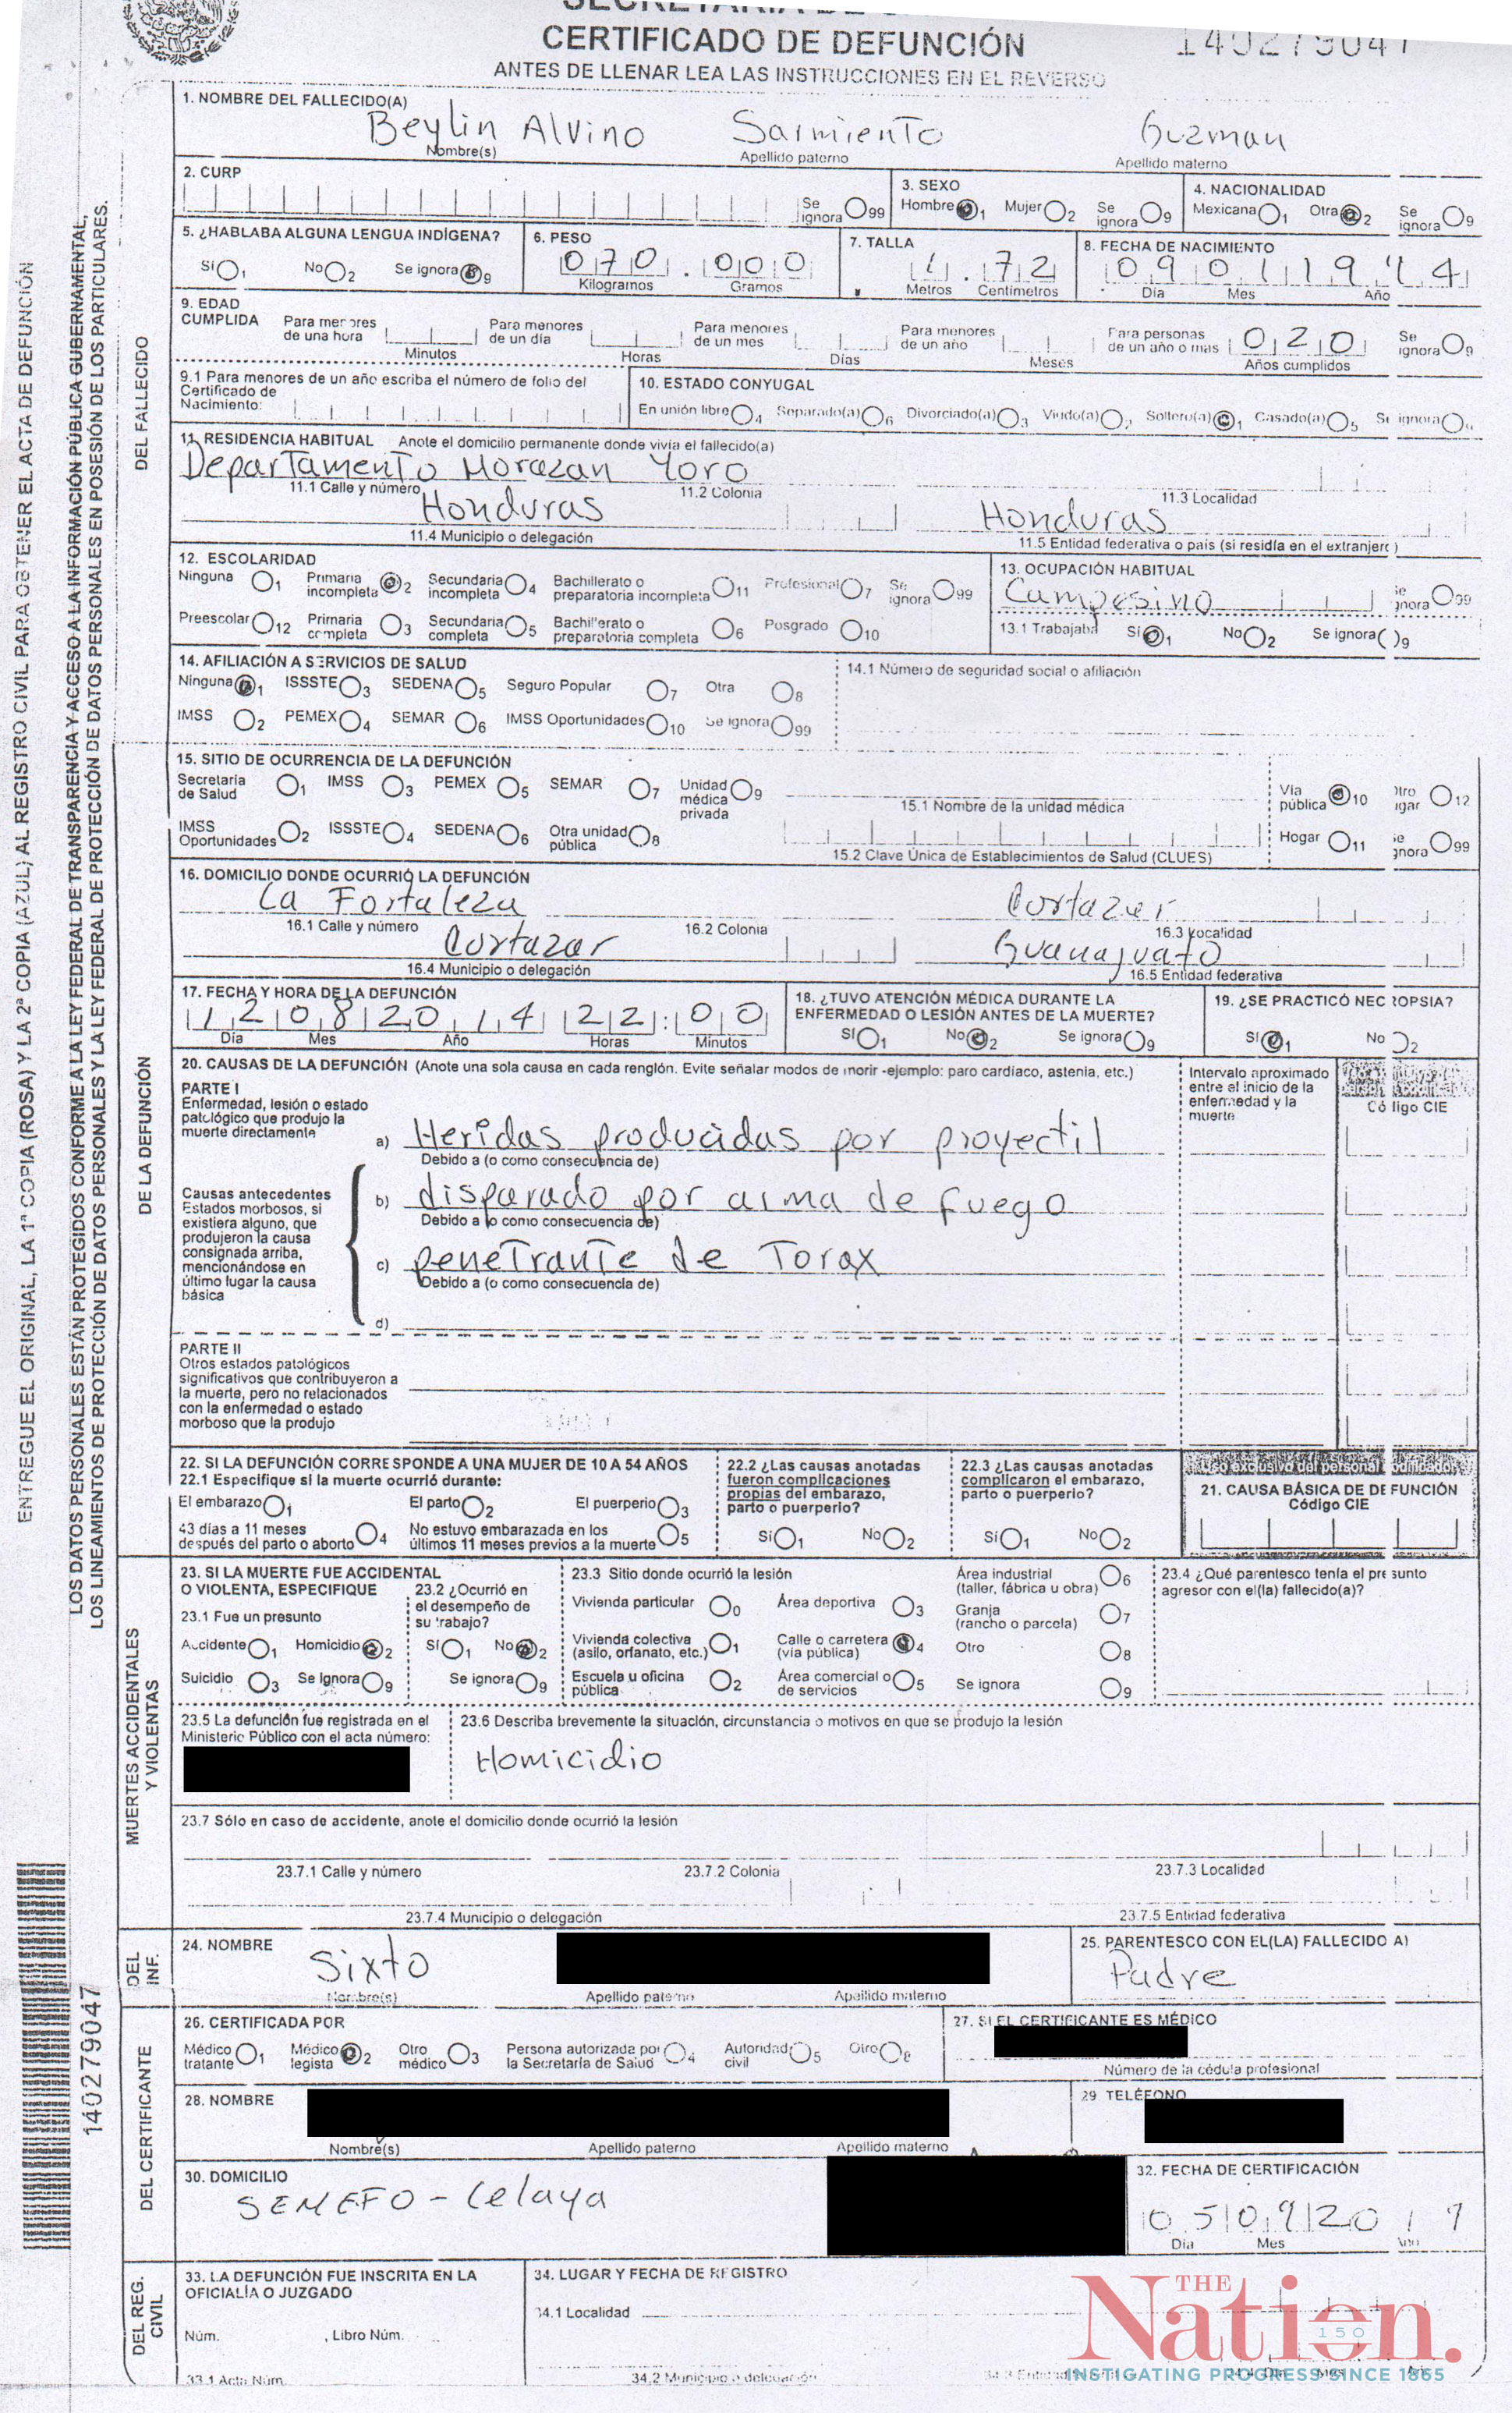 Death certificate for Beylin Sarmiento.